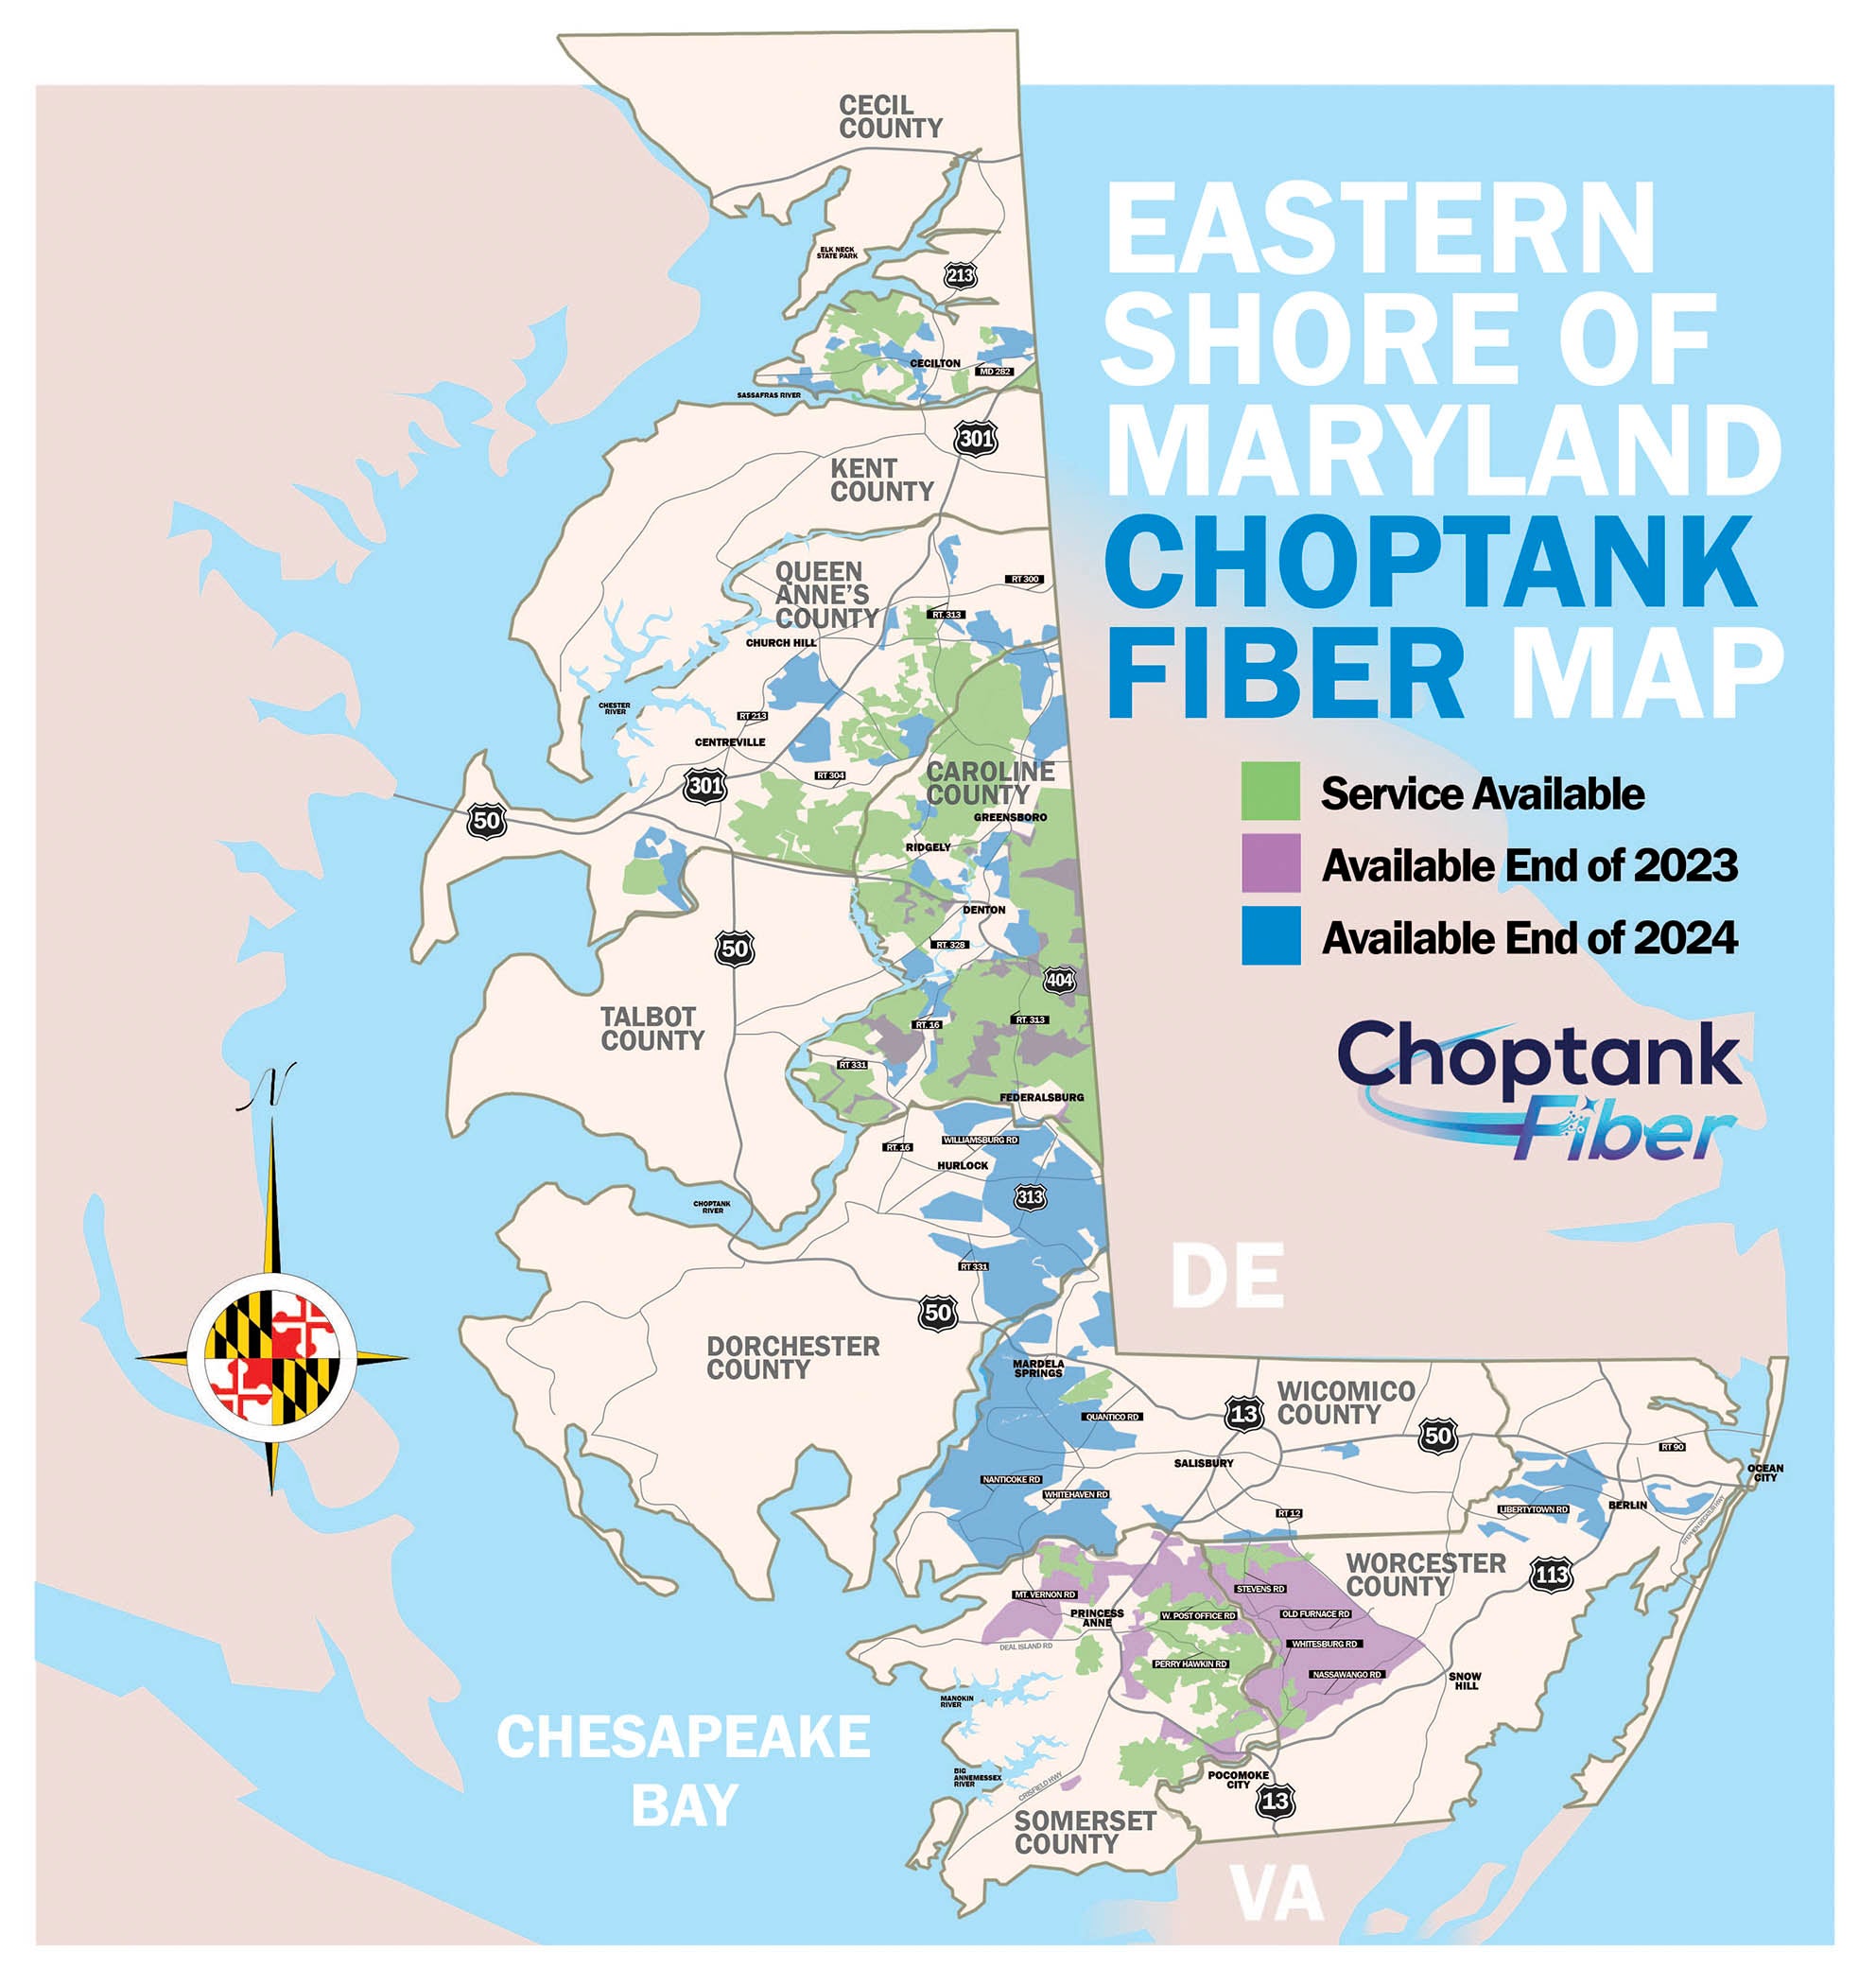 Choptank Fiber Map